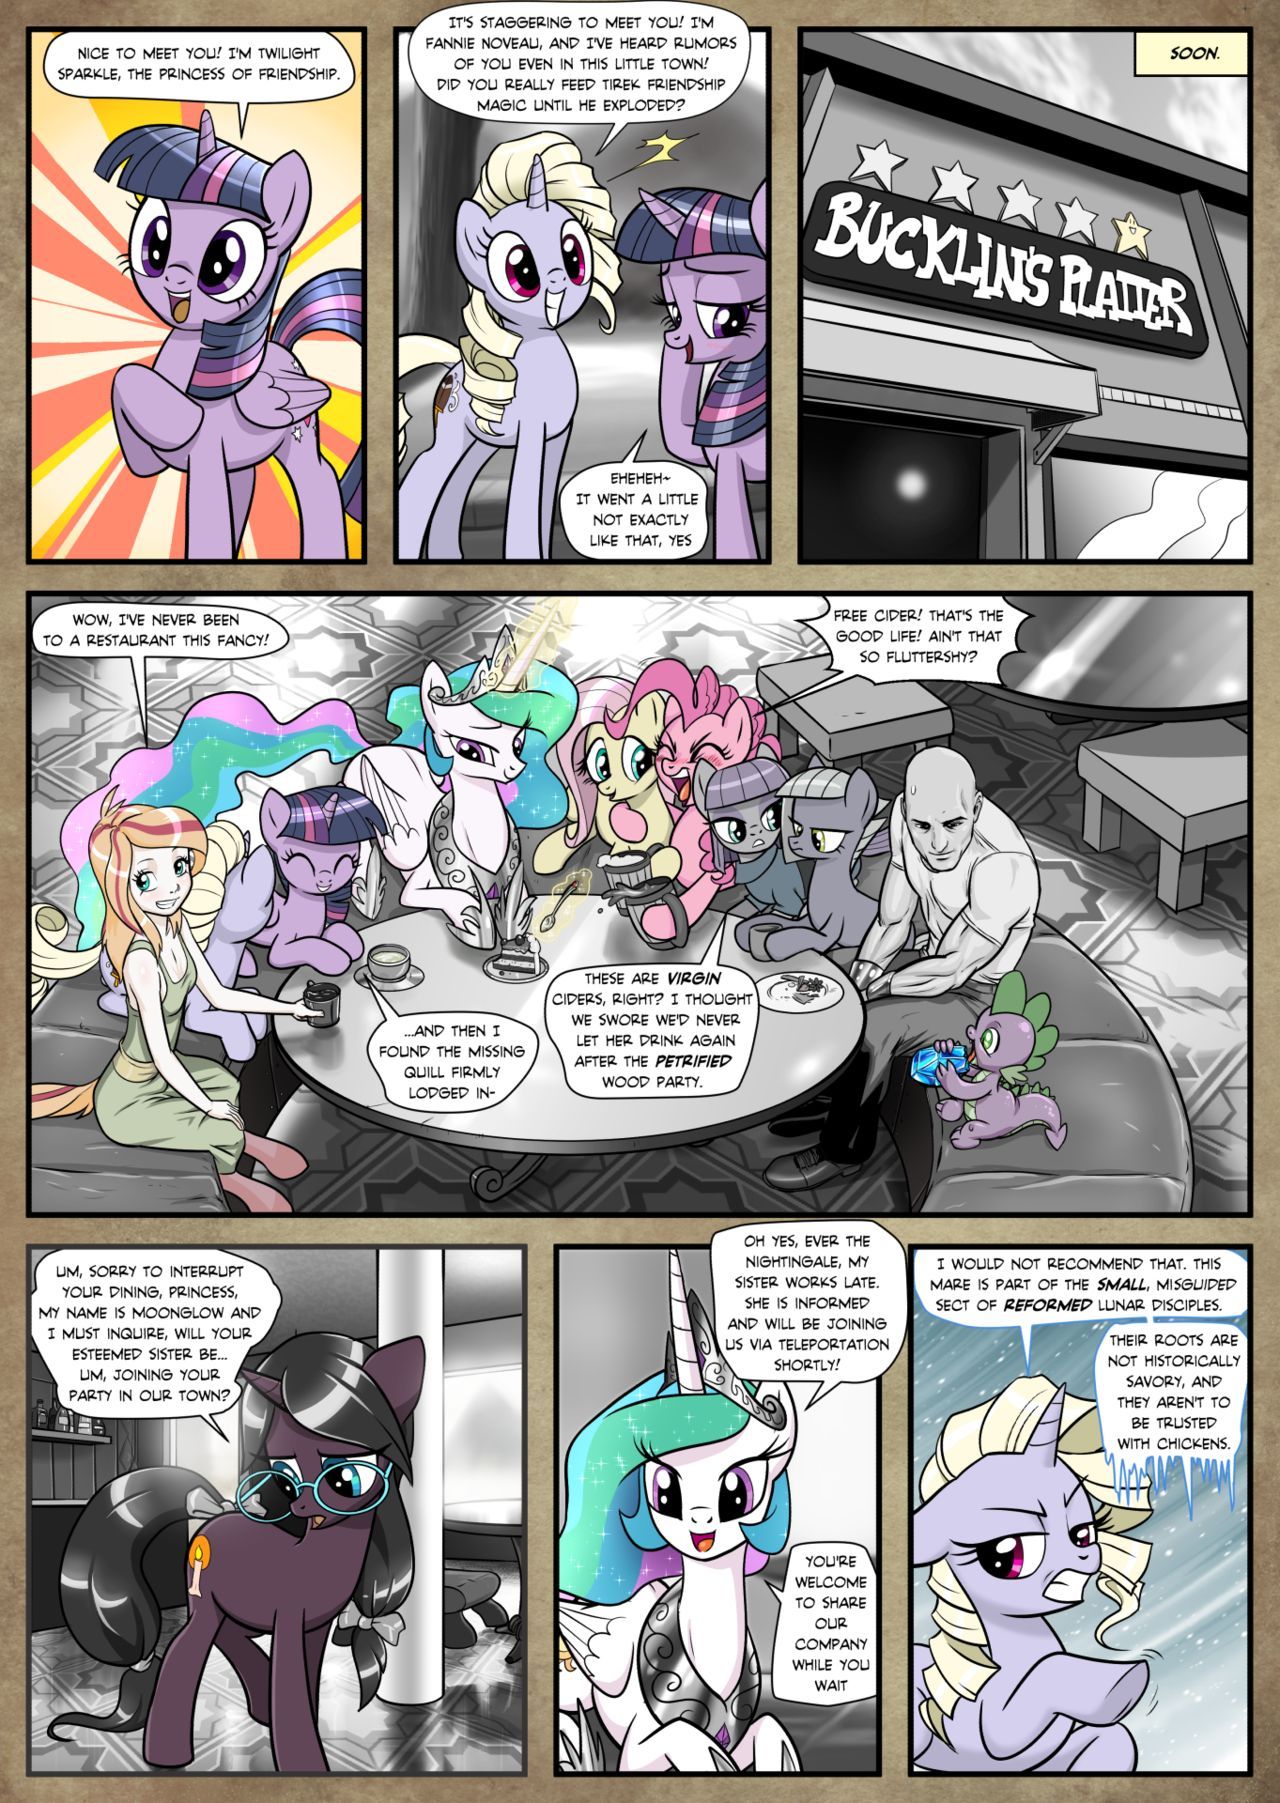 [Pencils] Anon's Pie Adventures (My Little Pony: Friendship is Magic) [In-Progress] 178